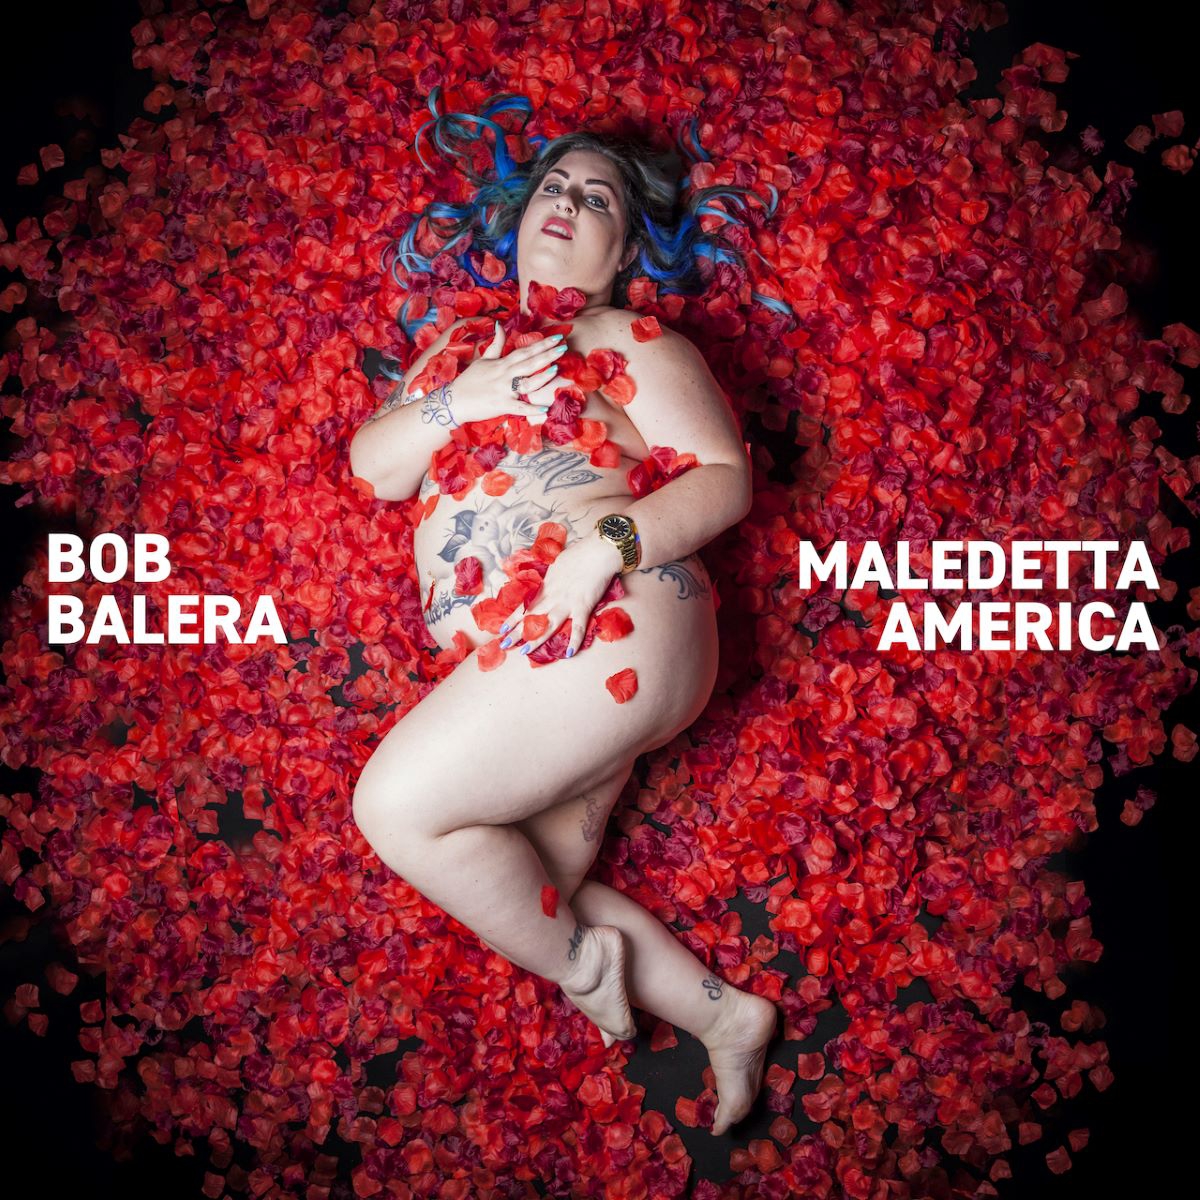 Bob Balera - “Maledetta America”